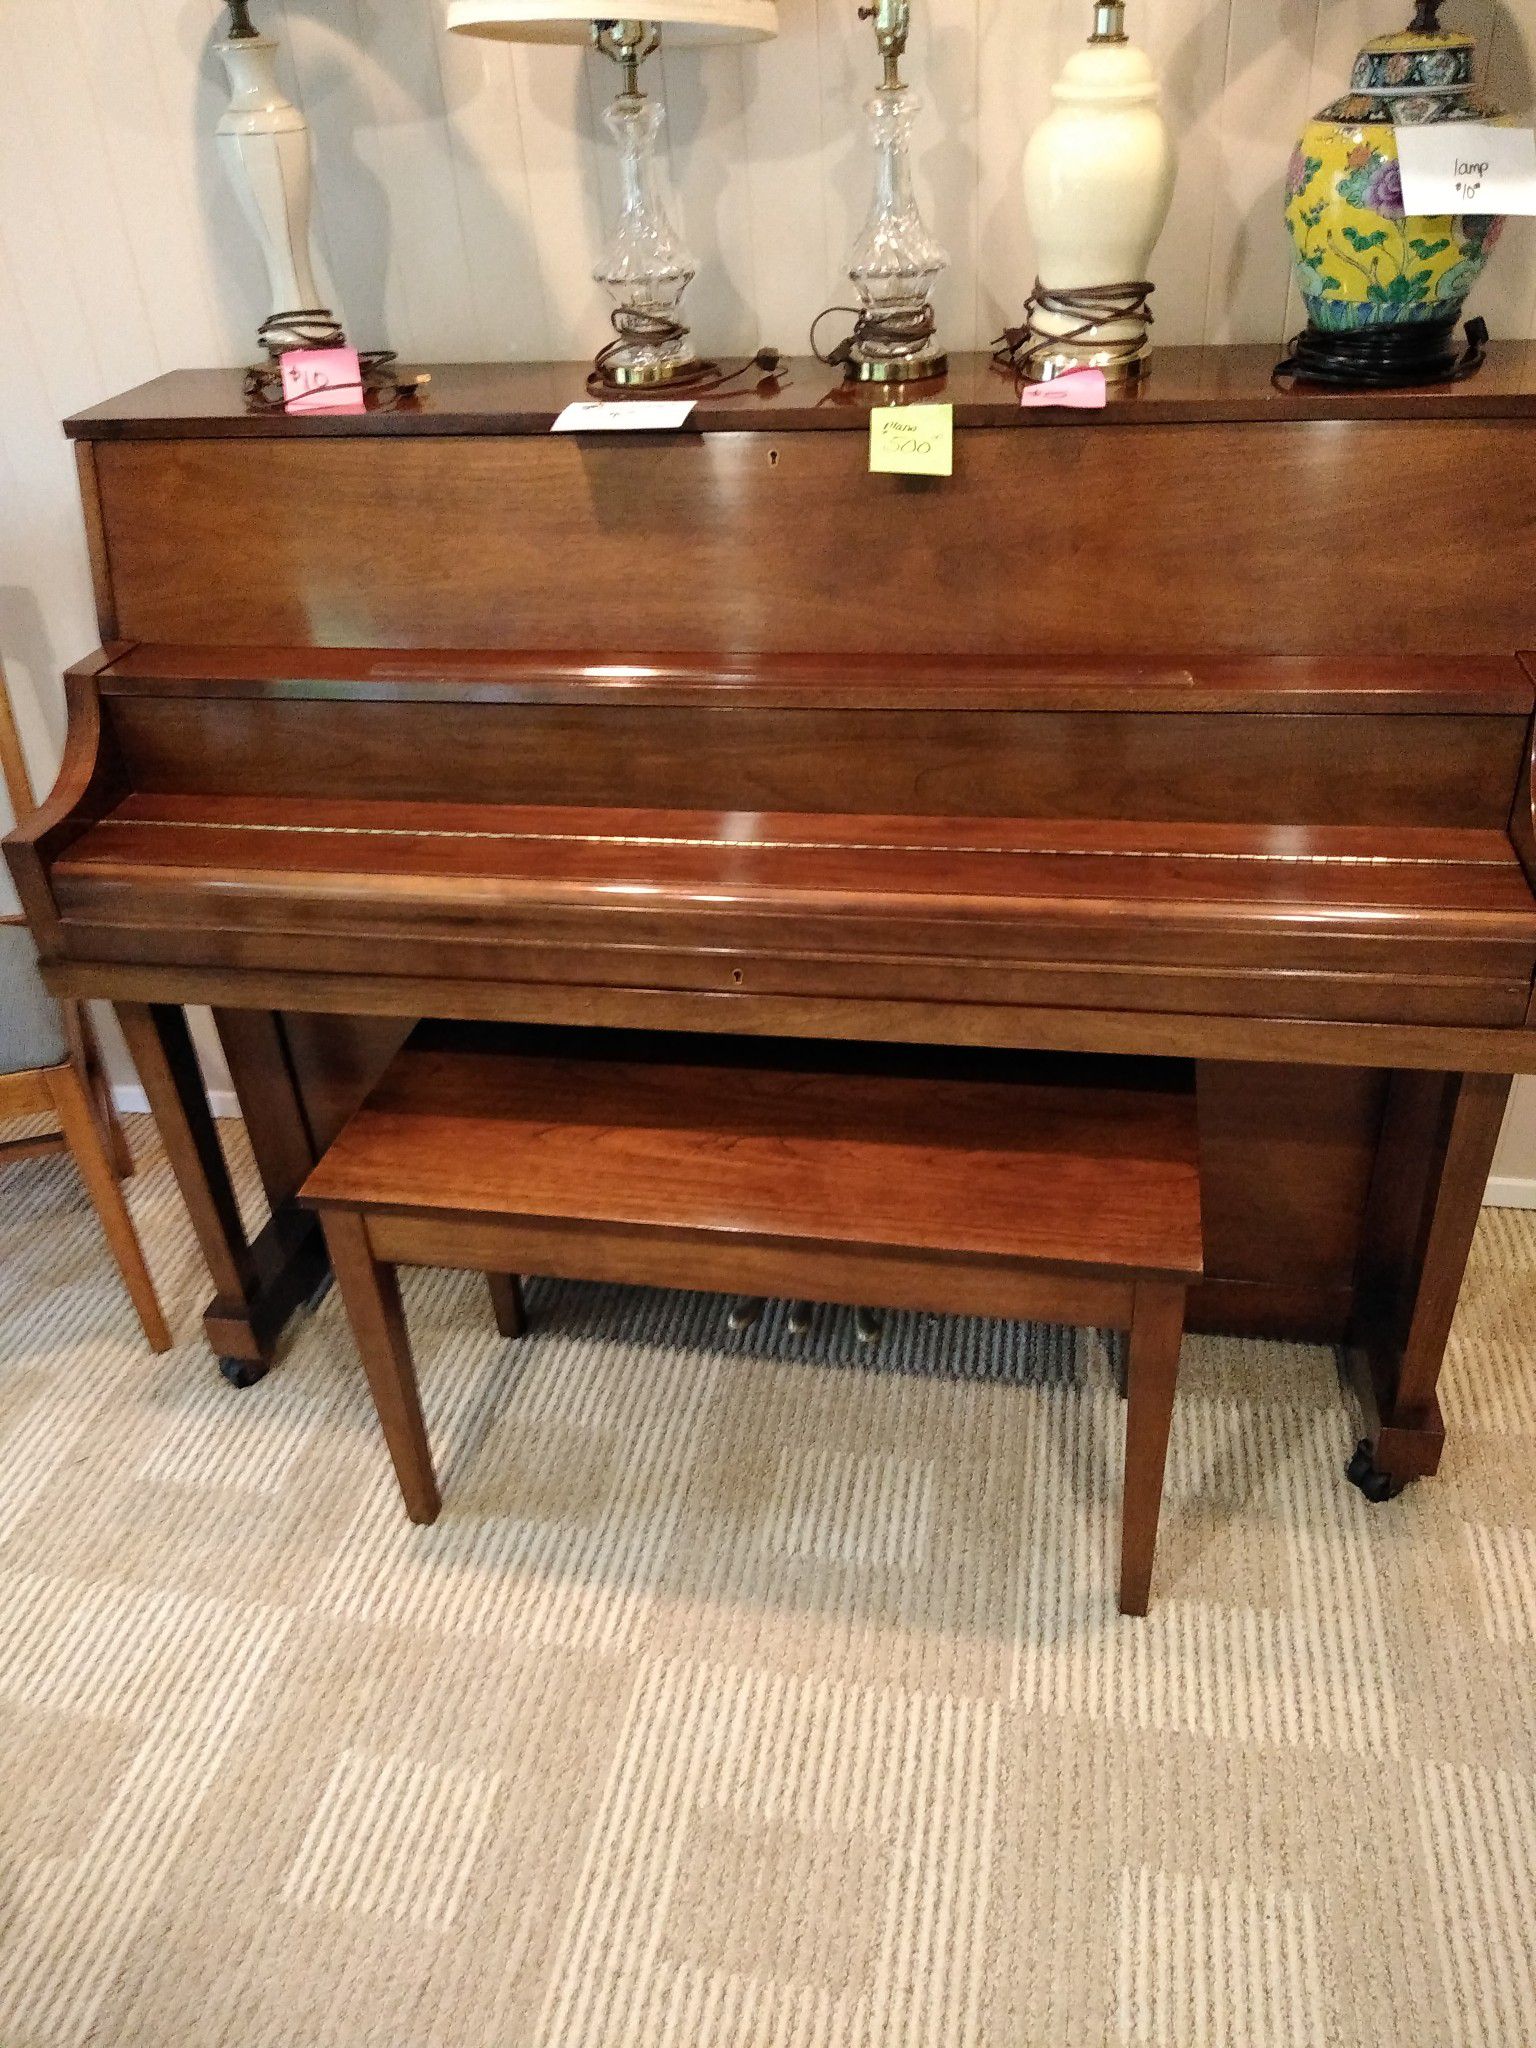 Yamaha spinet piano